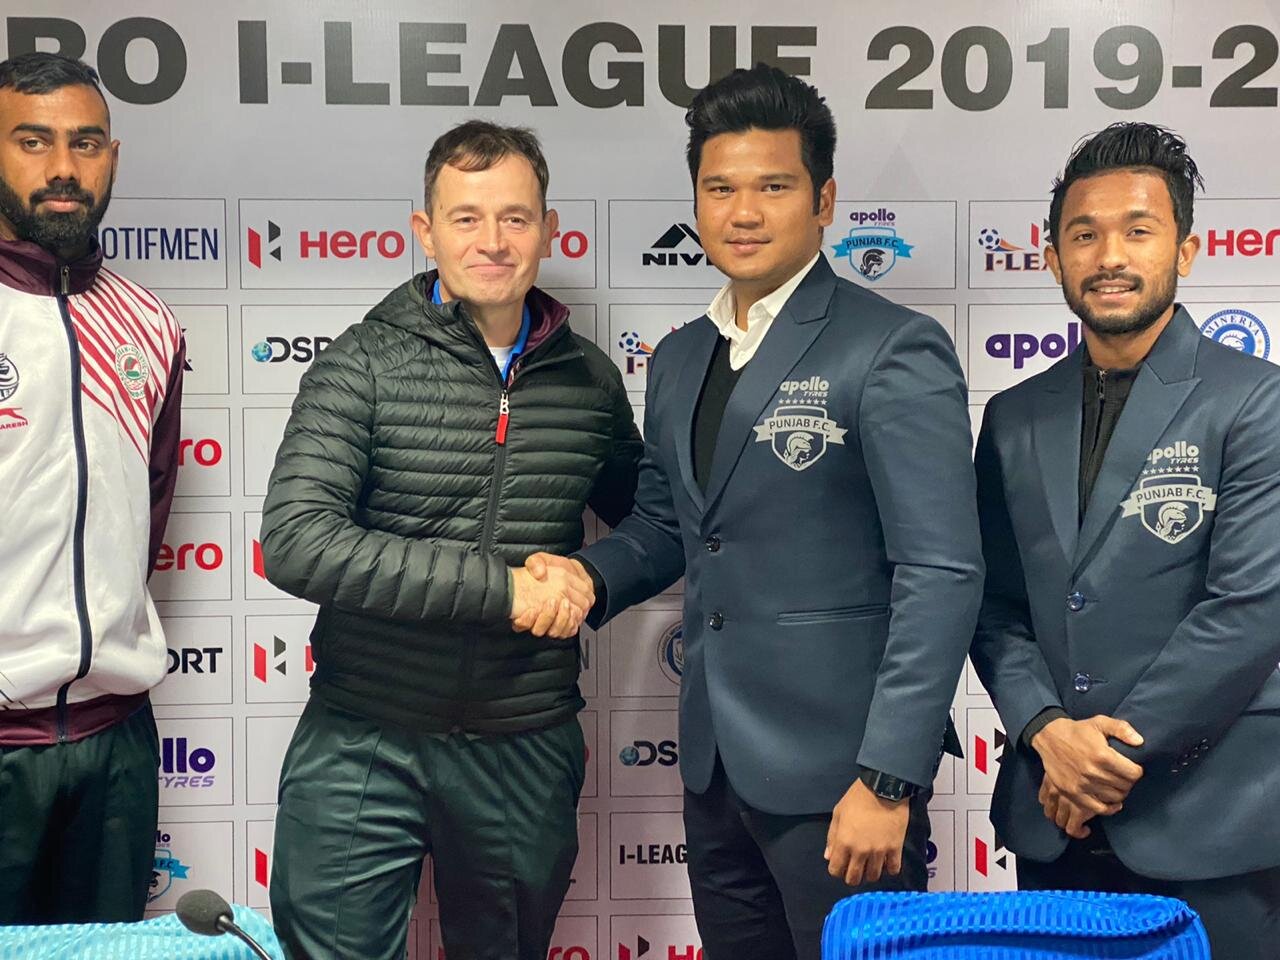 I-League 2019-20 Punjab FC Mohun Bagan